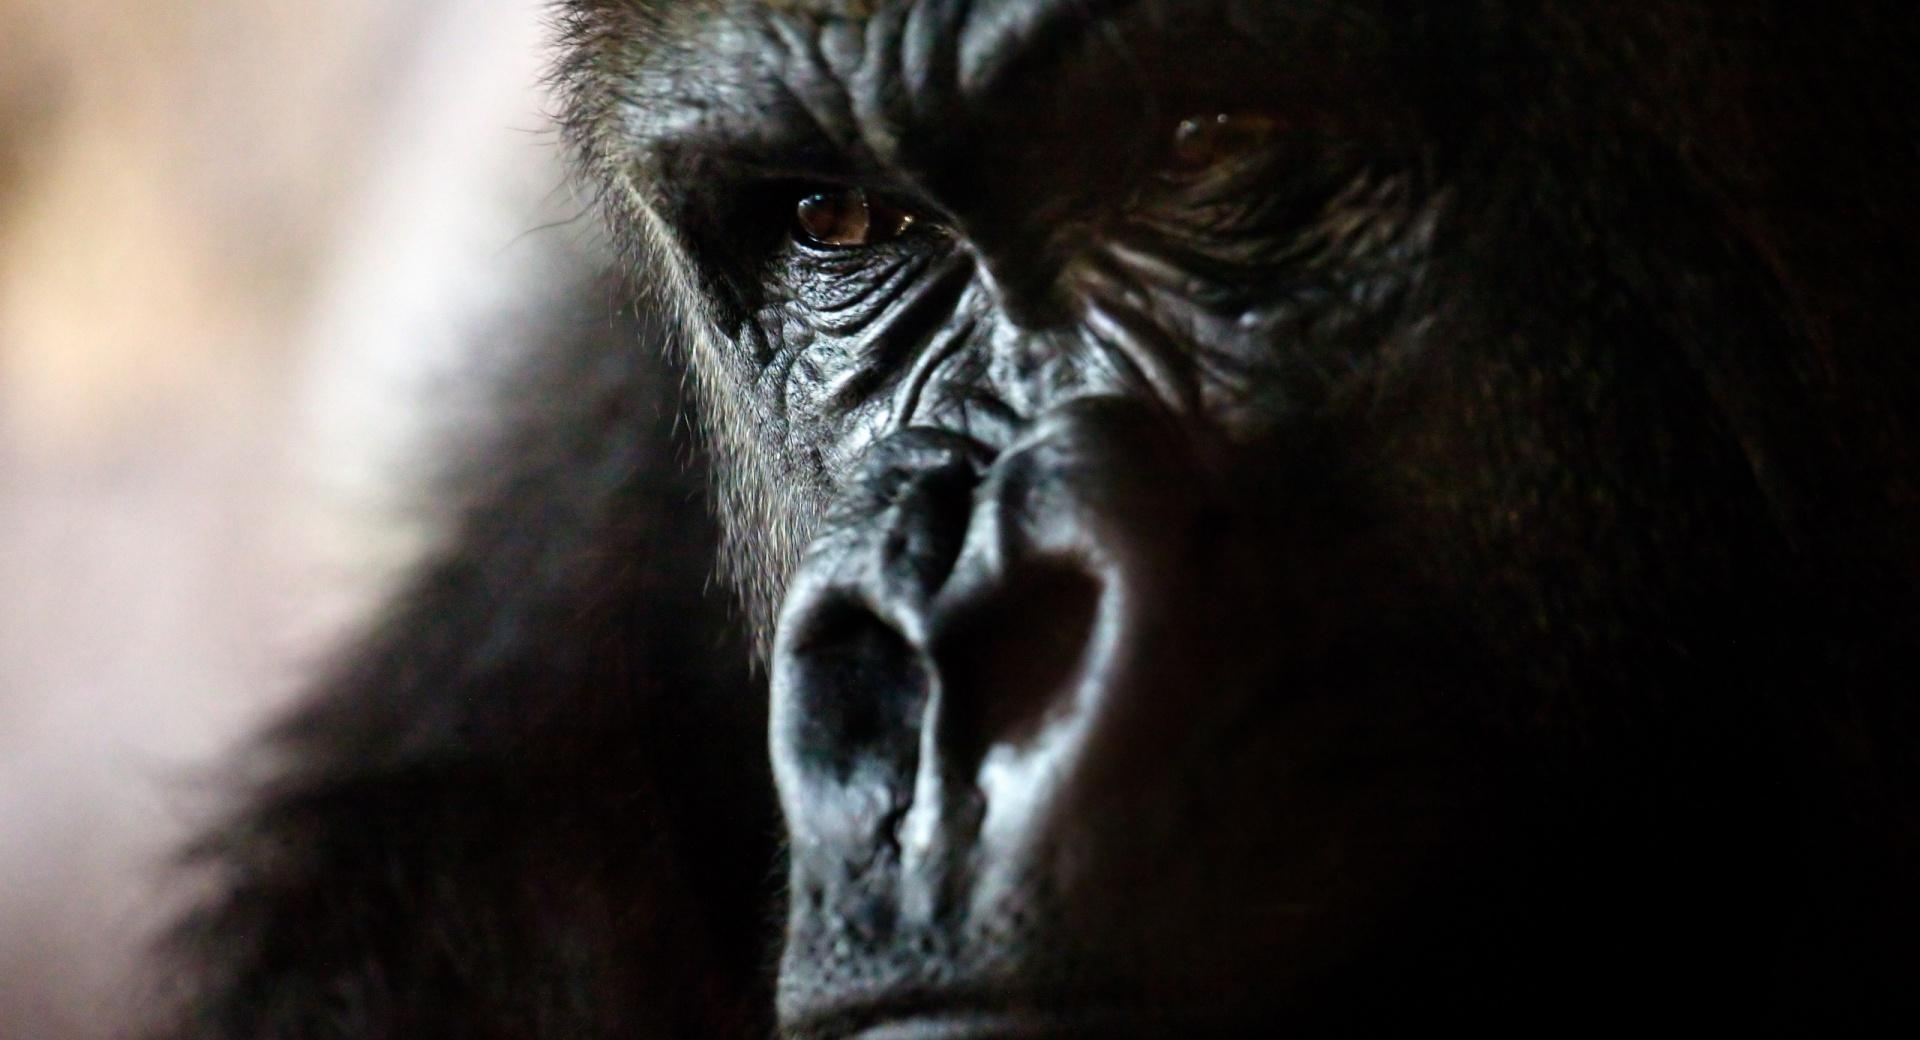 Gorilla Portrait at 1024 x 1024 iPad size wallpapers HD quality